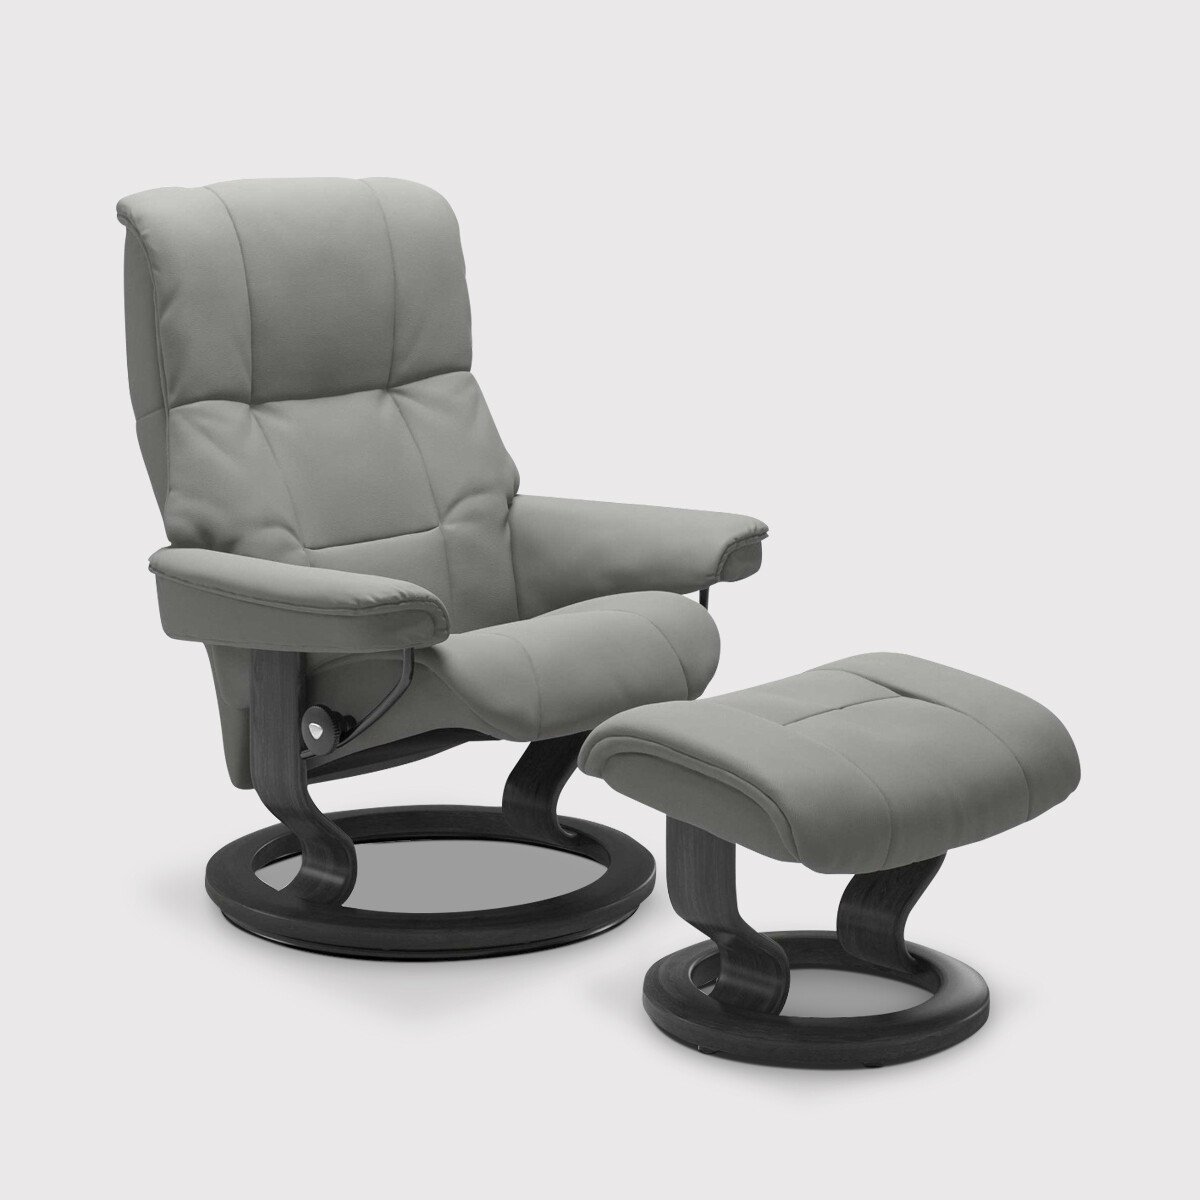 Stressless Mayfair Medium Recliner Chair & Stool Quickship, Grey Leather | Barker & Stonehouse